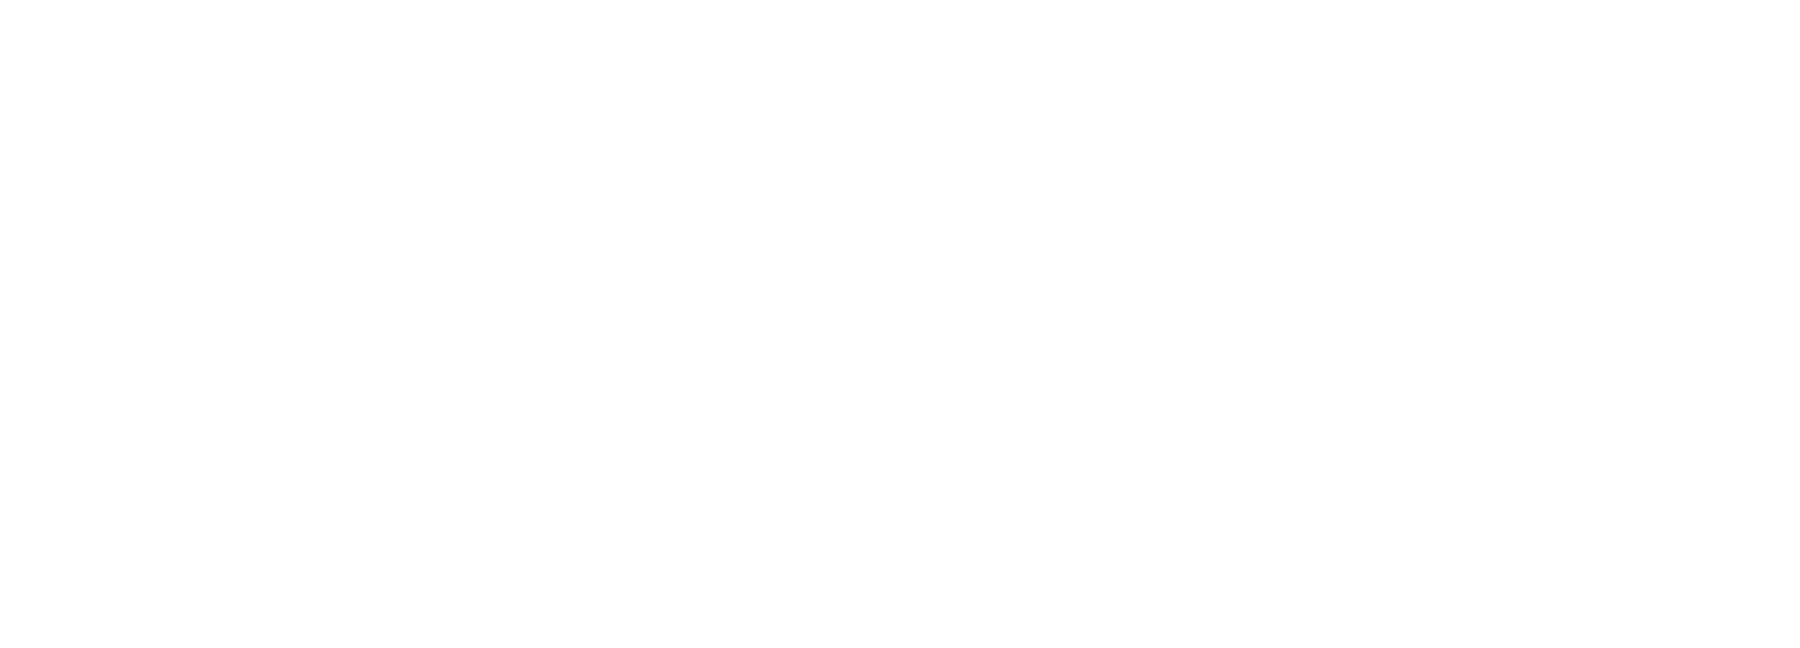 intersystem_logo_b